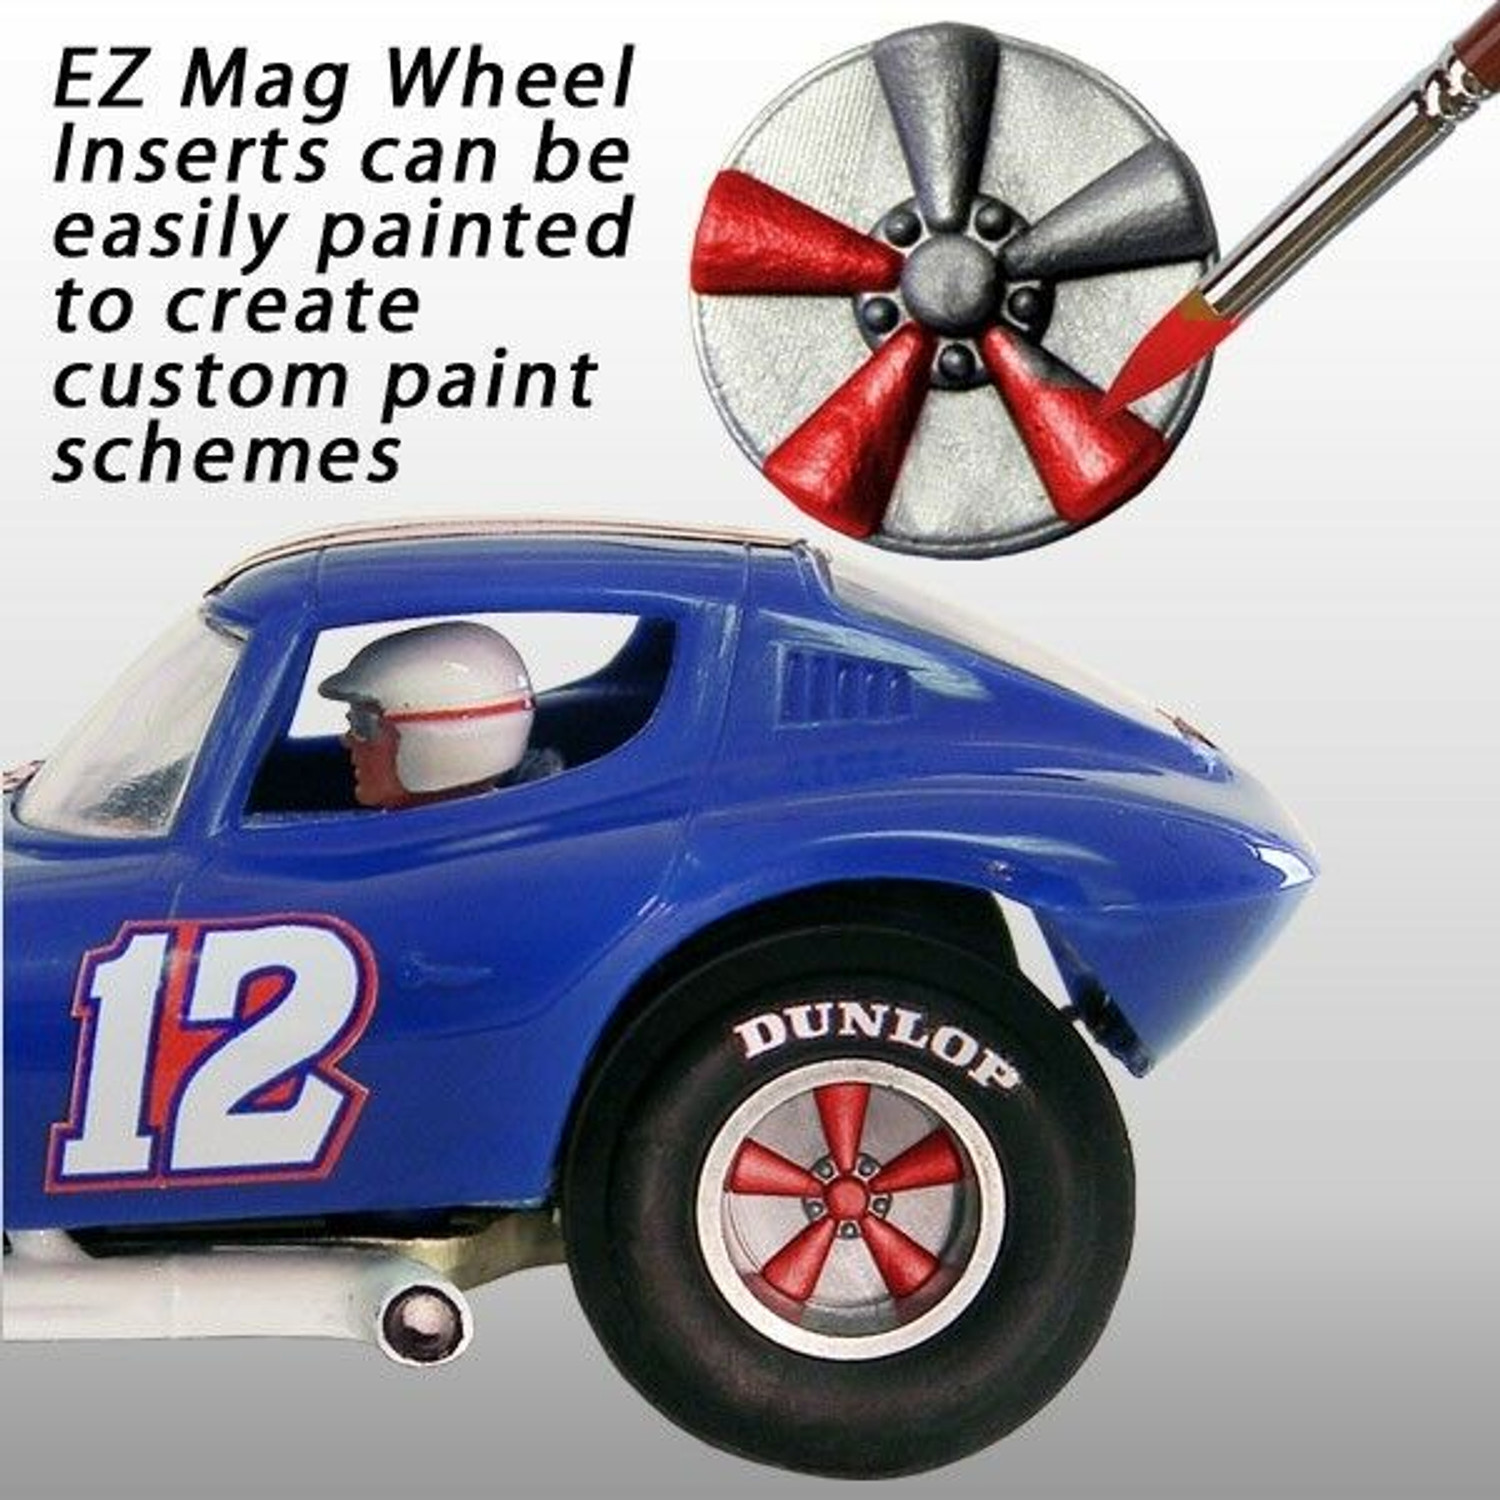 WI-2943-S Elliptical-Style Wheel EZ Mag Wheel Inserts